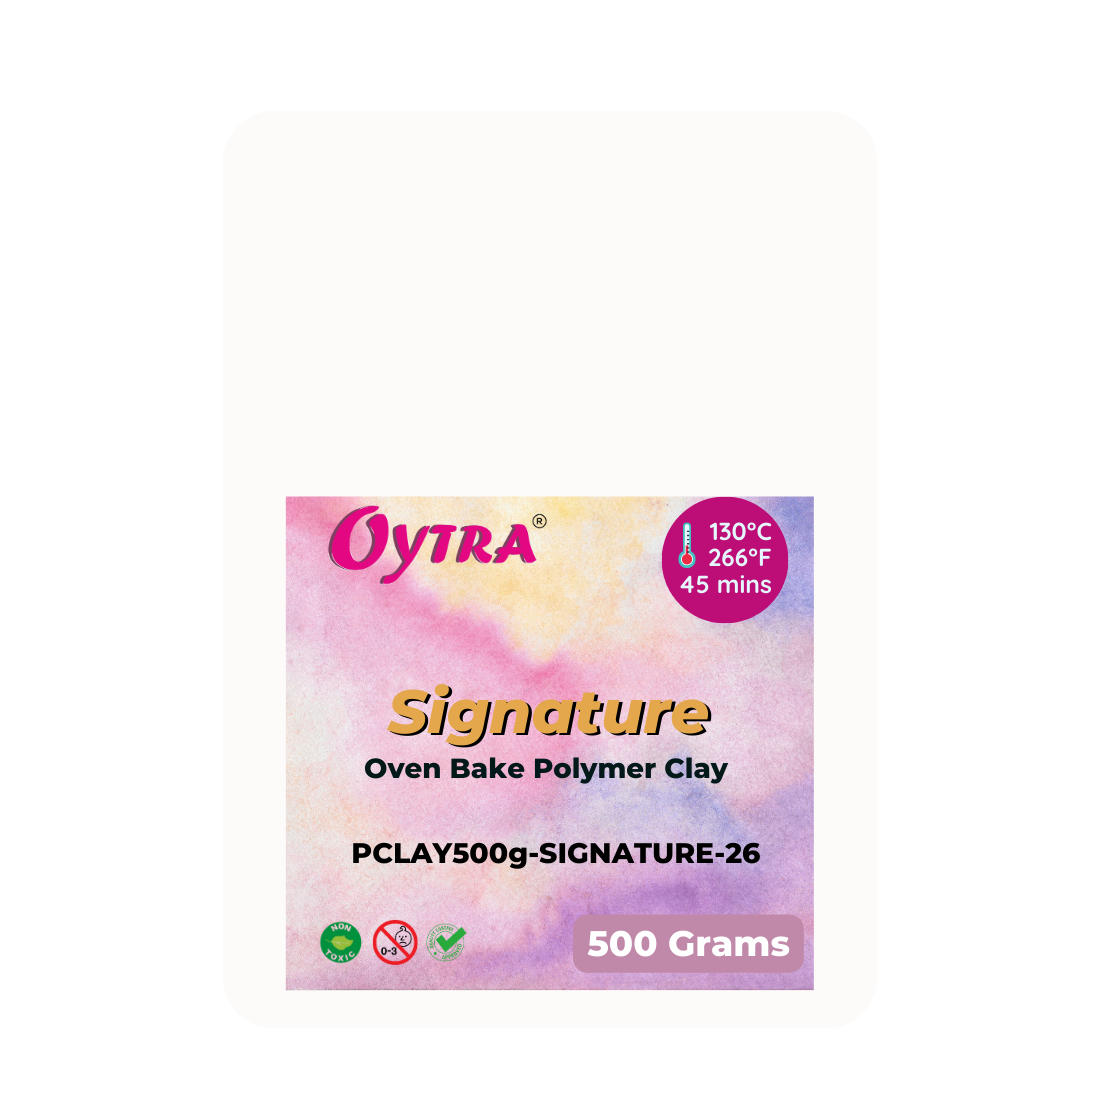 OYTRA 50 Colors Polymer Clay Oven Bake 20 Grams Each Art Clay Price in  India - Buy OYTRA 50 Colors Polymer Clay Oven Bake 20 Grams Each Art Clay  online at